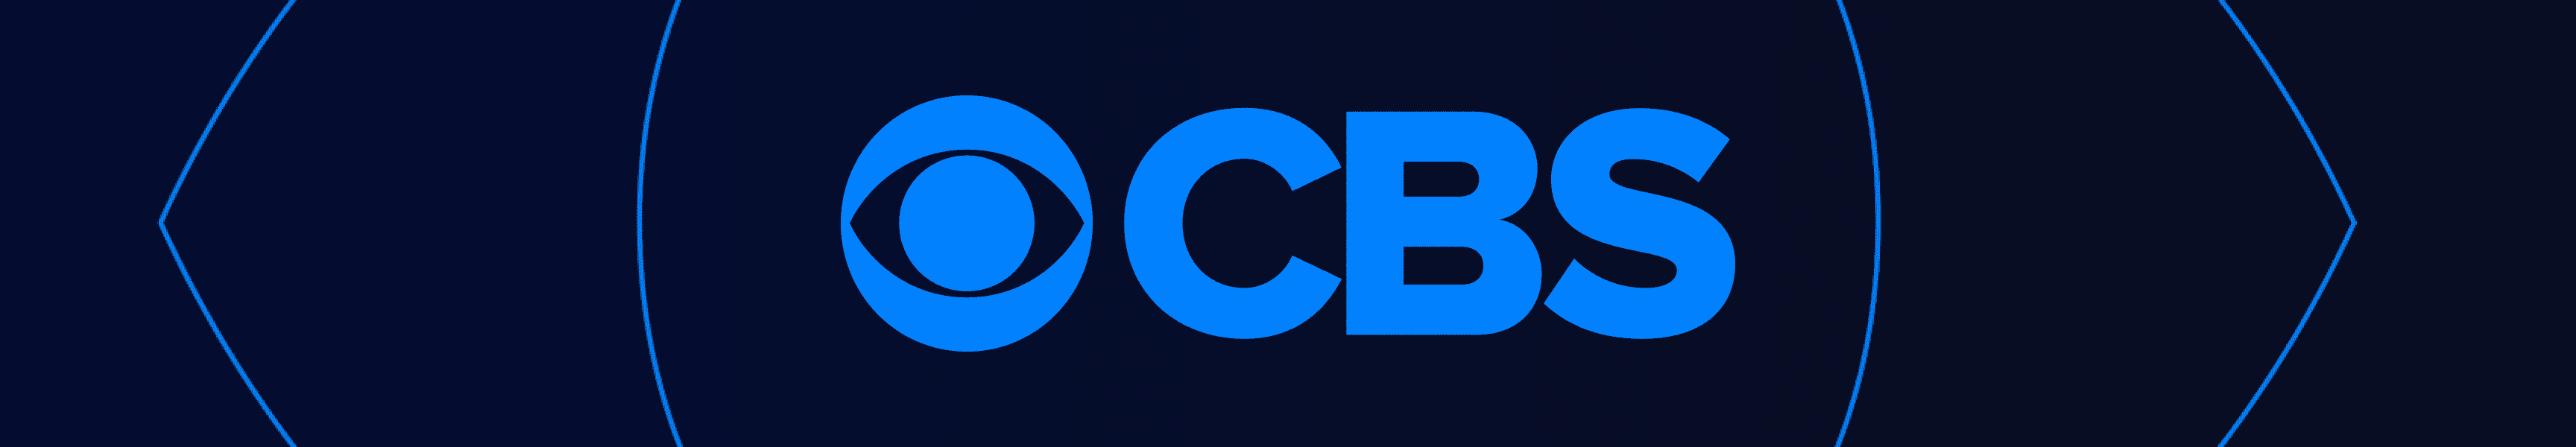 CBS Entertainment Bags